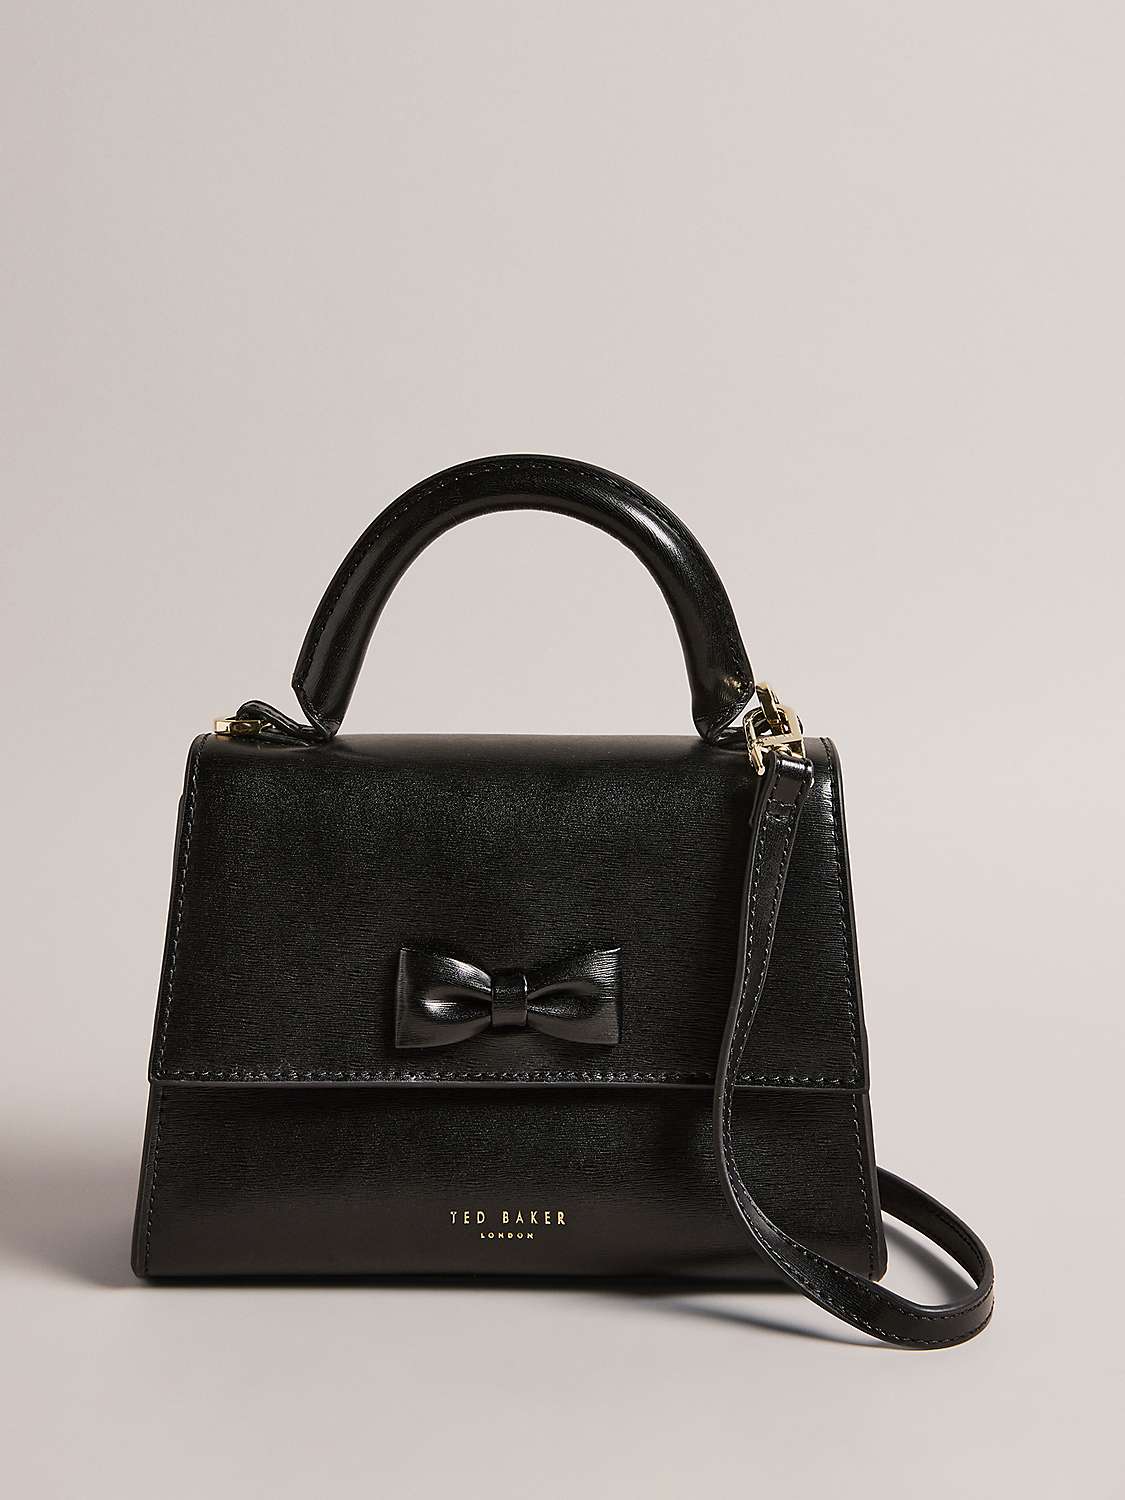 Mini Black Bag With Handle Top Sellers | bellvalefarms.com